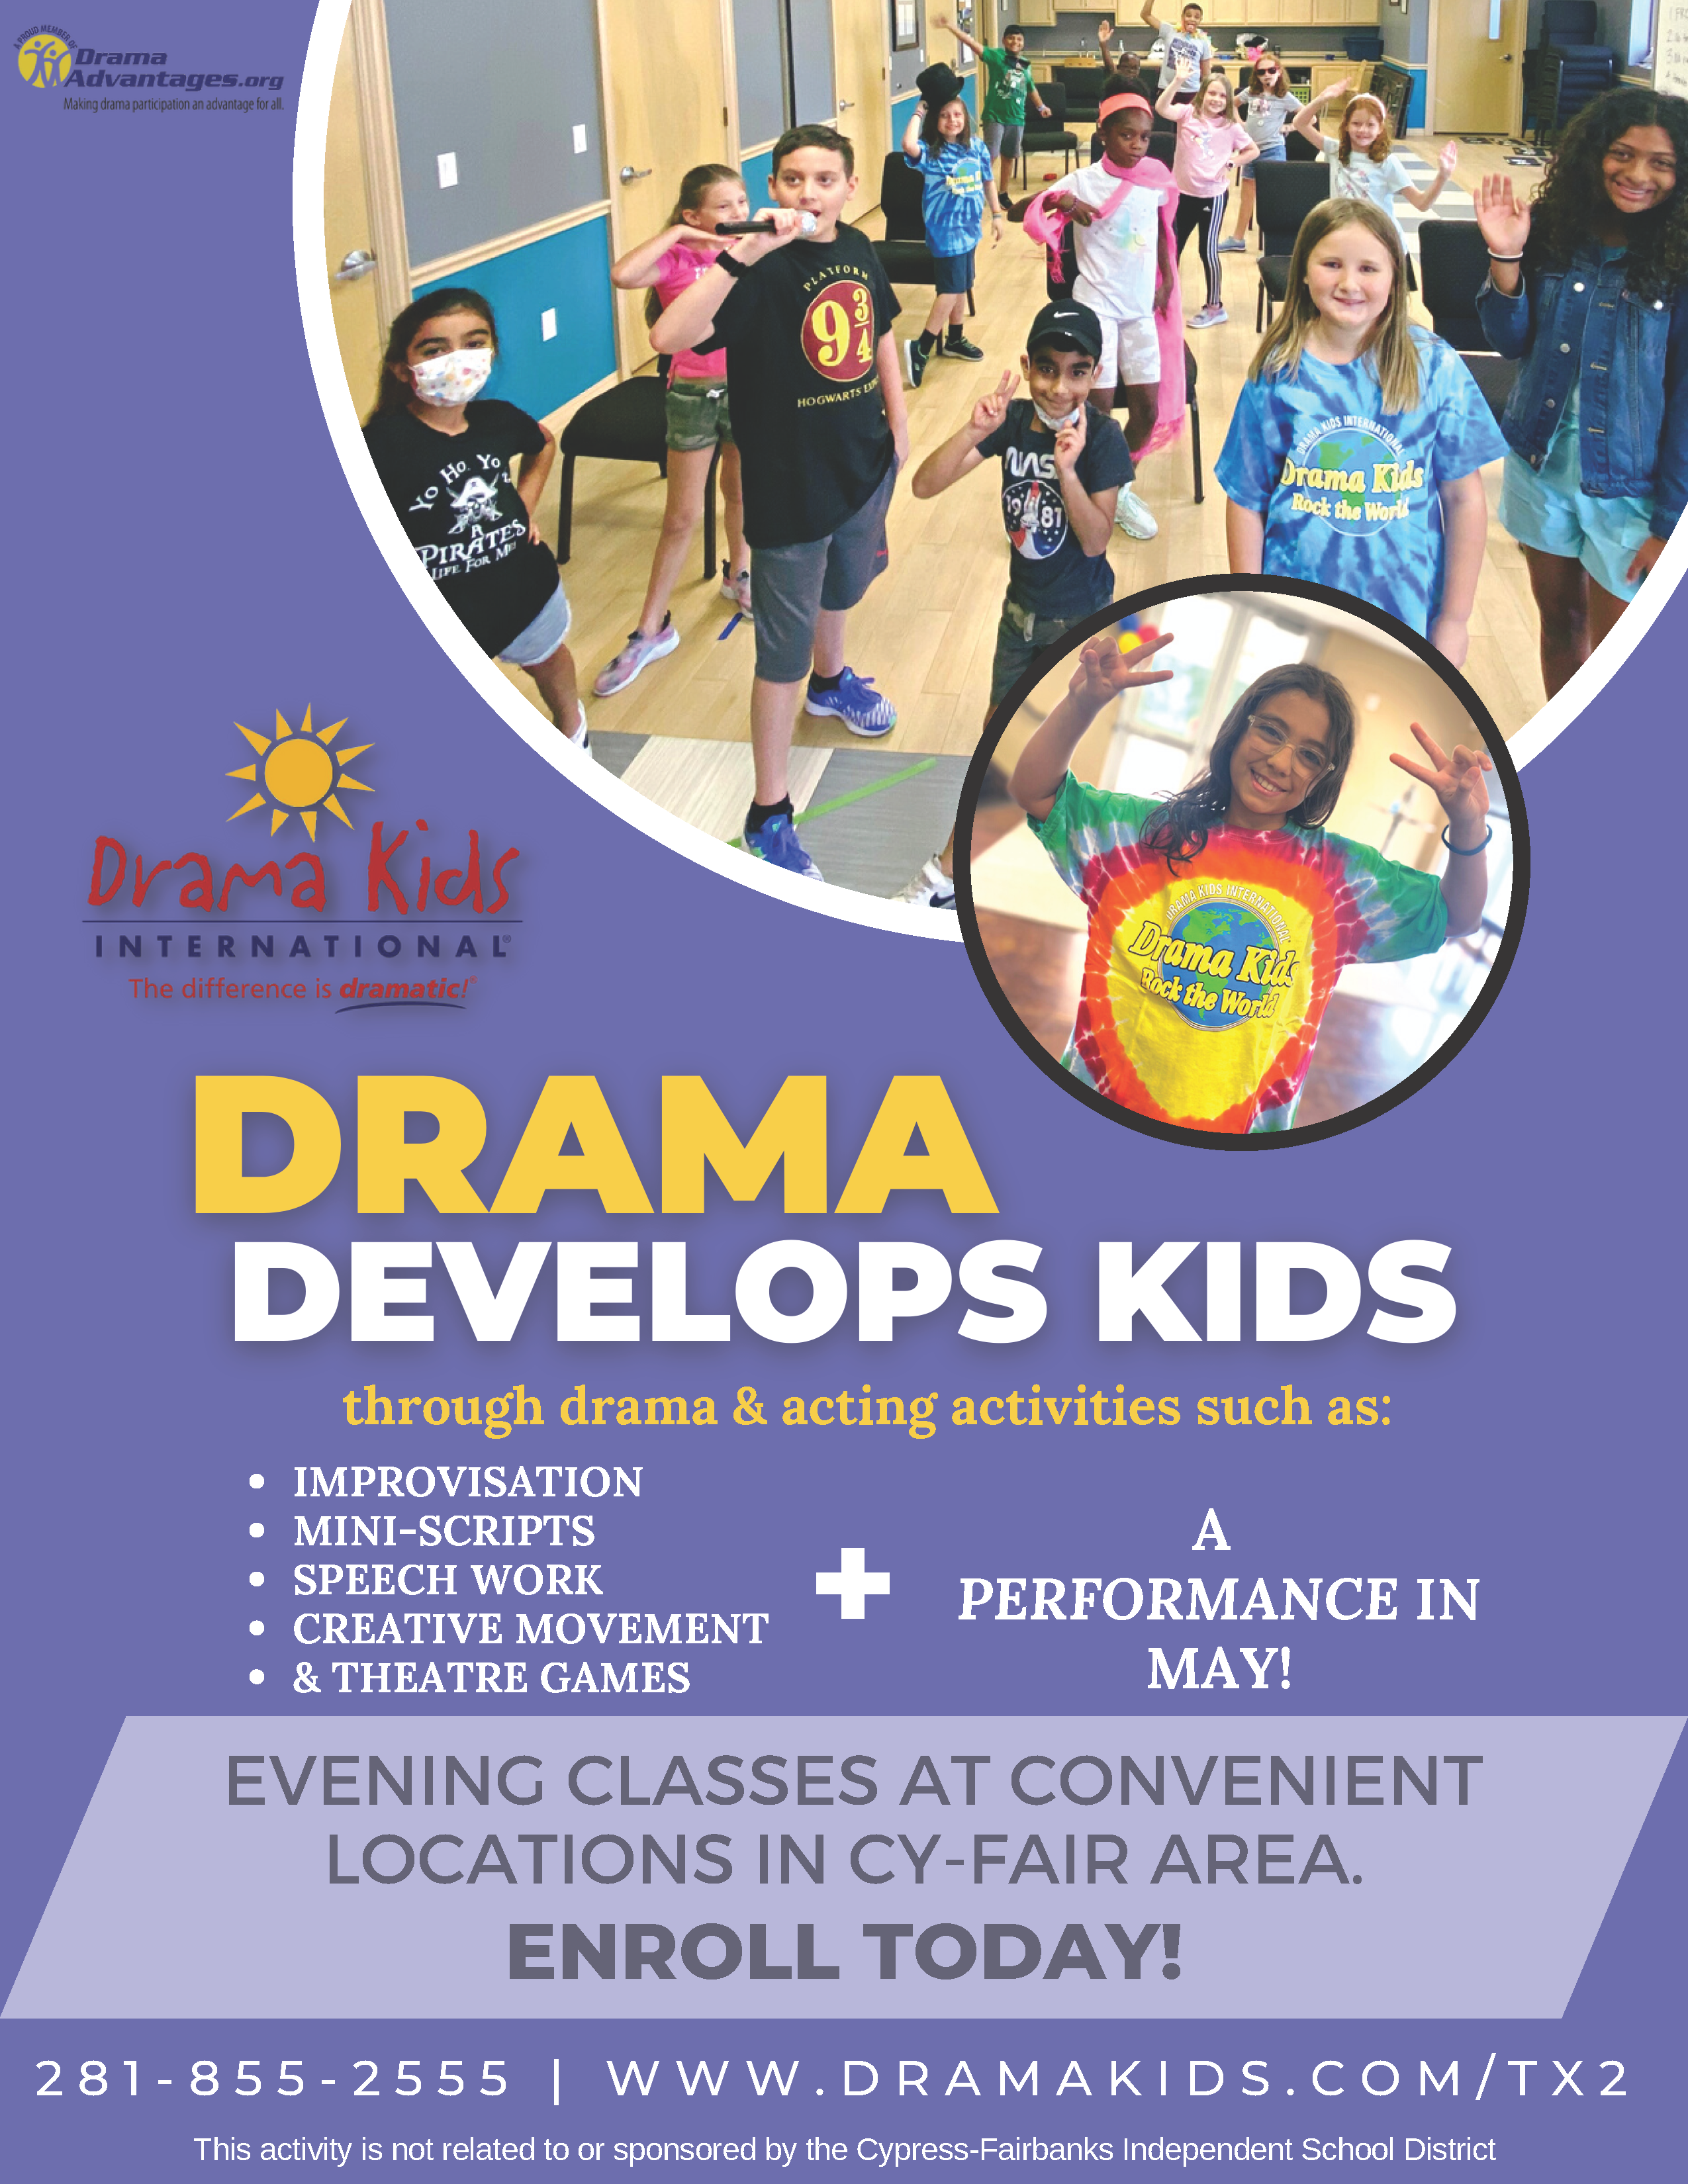 Drama Kids International - Drama develops kids through drama and acting activities